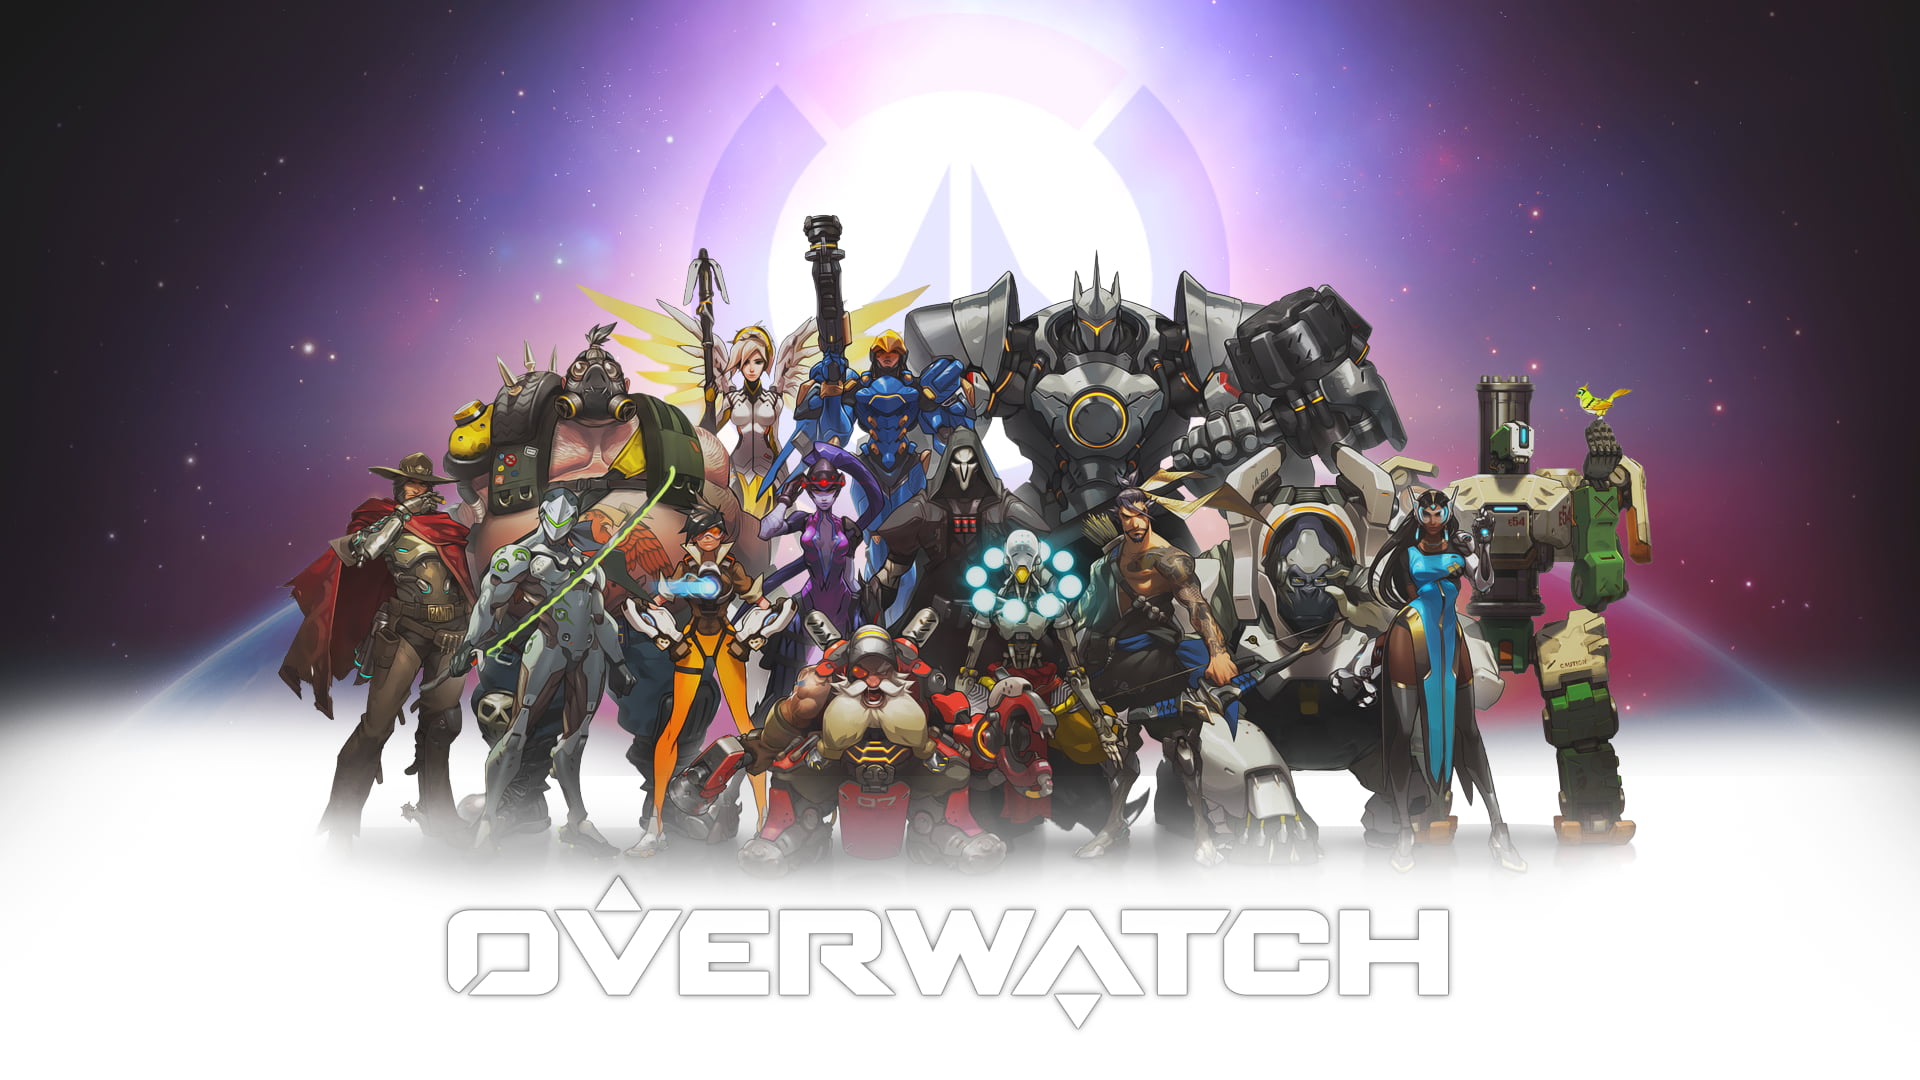 Overwatch graphic wallpaper, Overwatch, Pharah (Overwatch), Roadhog (Overwatch), Widowmaker (Overwatch)